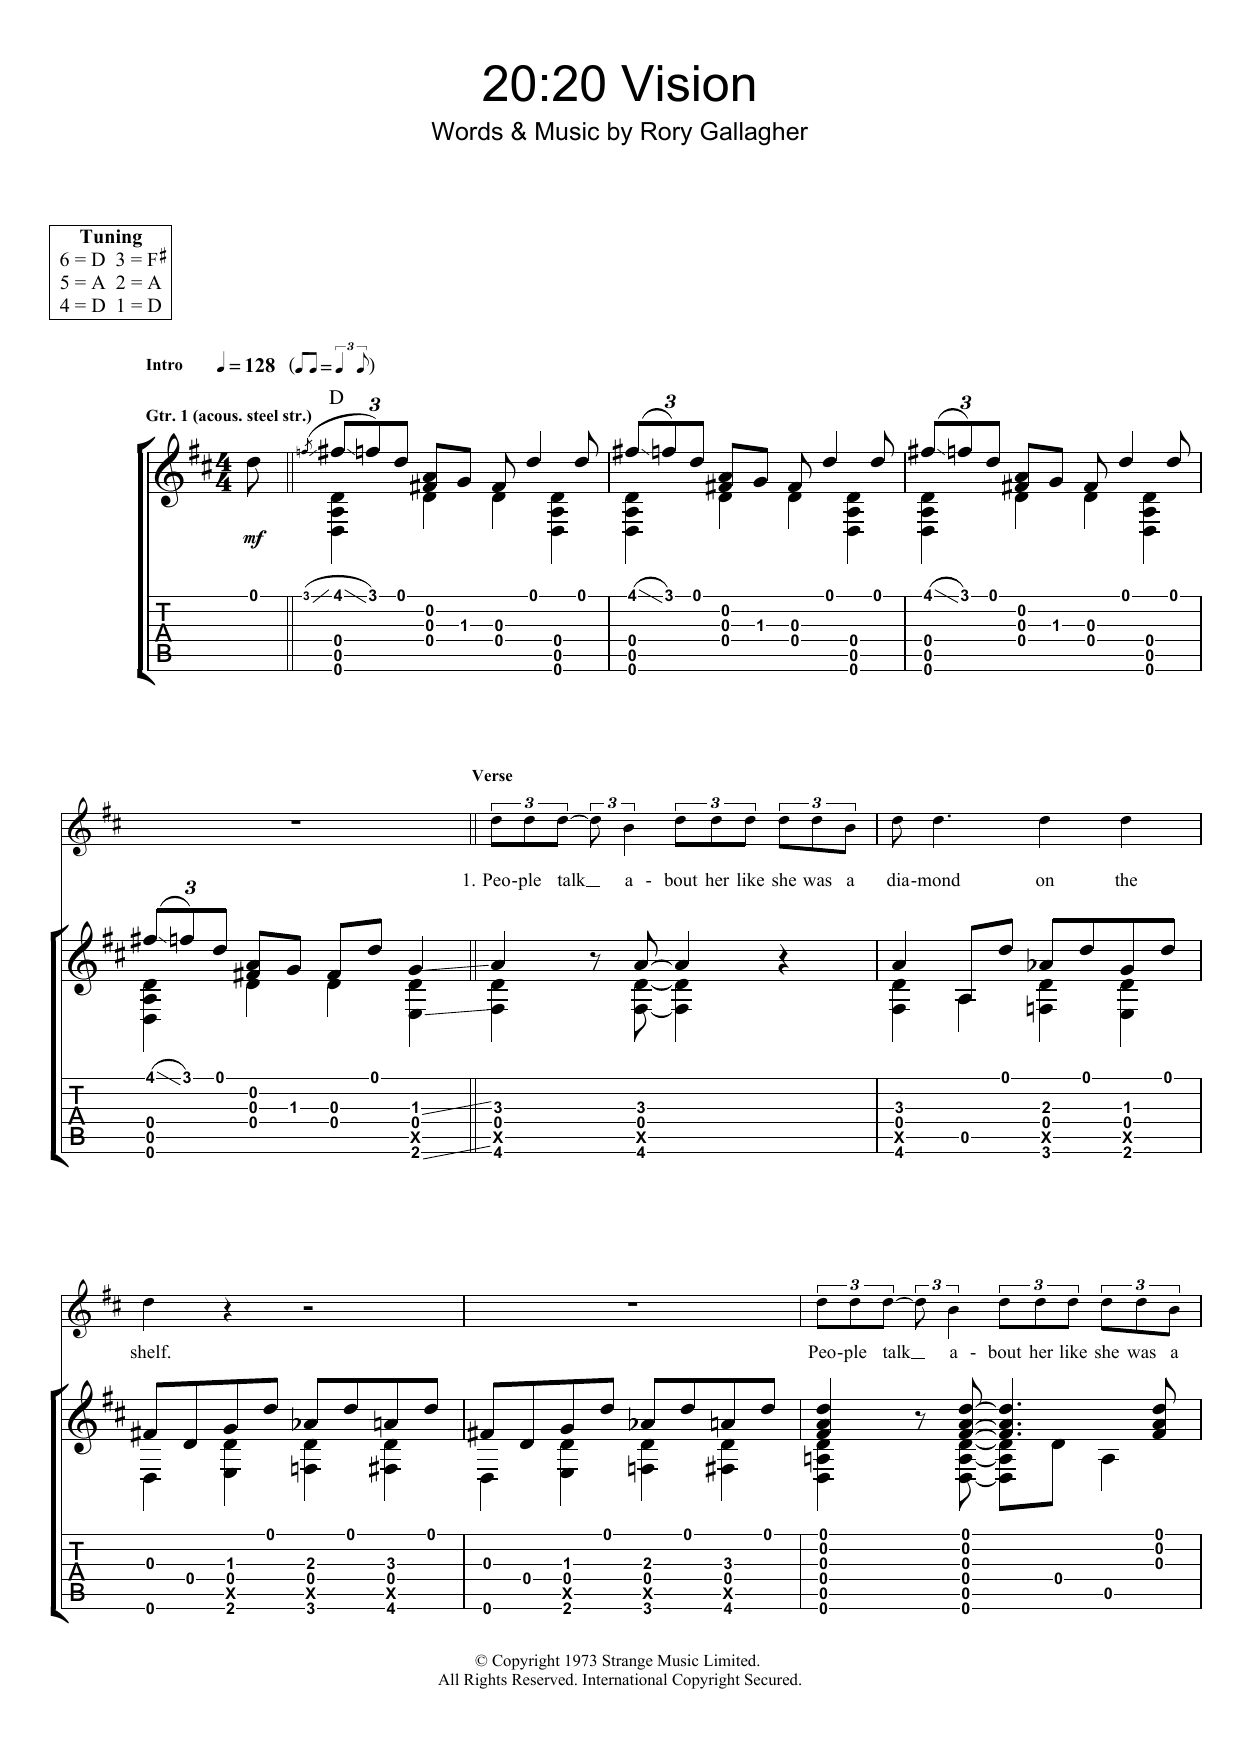 Rory Gallagher Twenty Twenty Vision Sheet Music Notes & Chords for Guitar Tab - Download or Print PDF